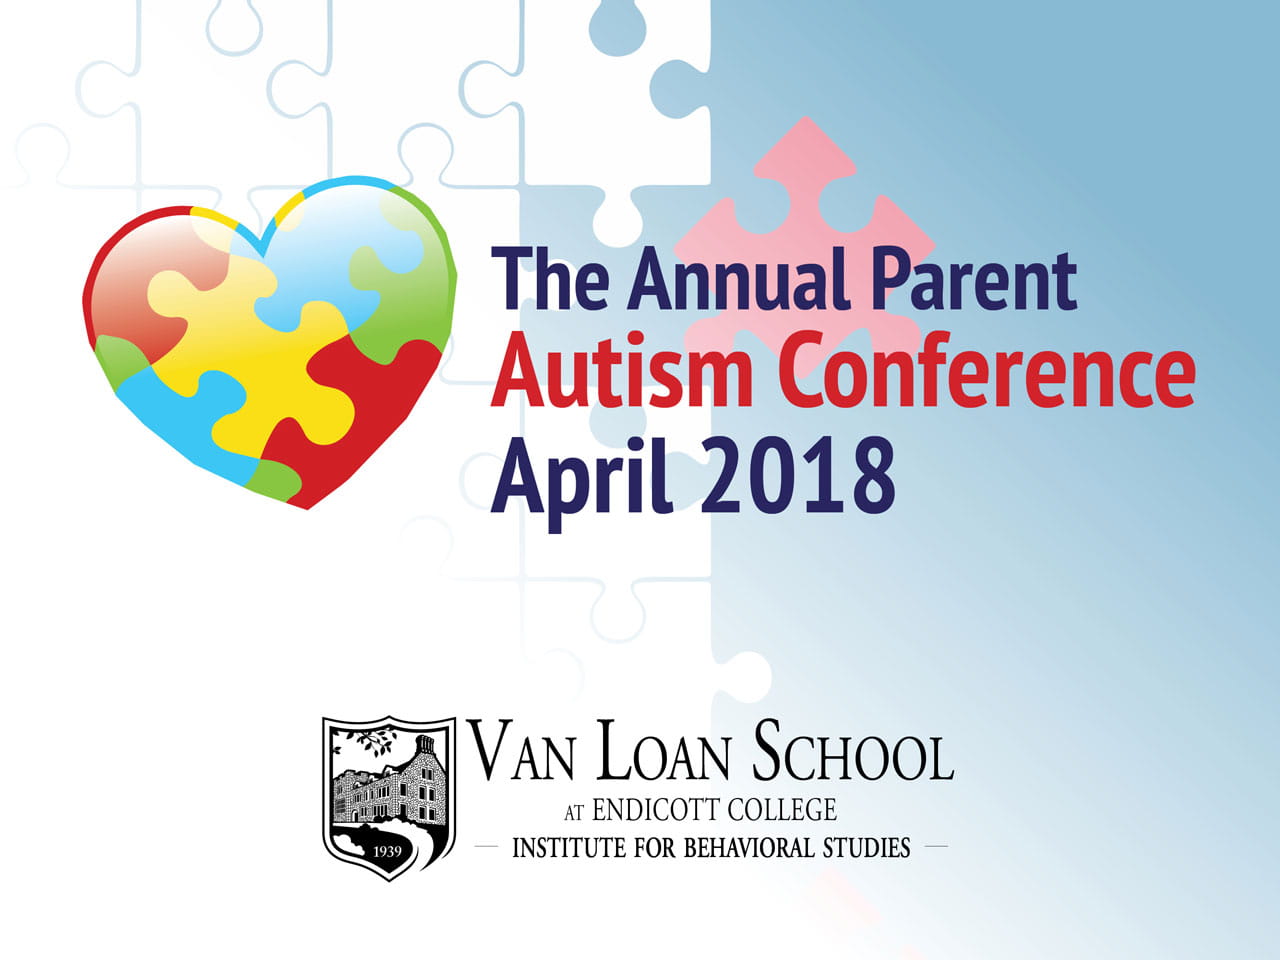 Annual Parent Autism Conference graphic